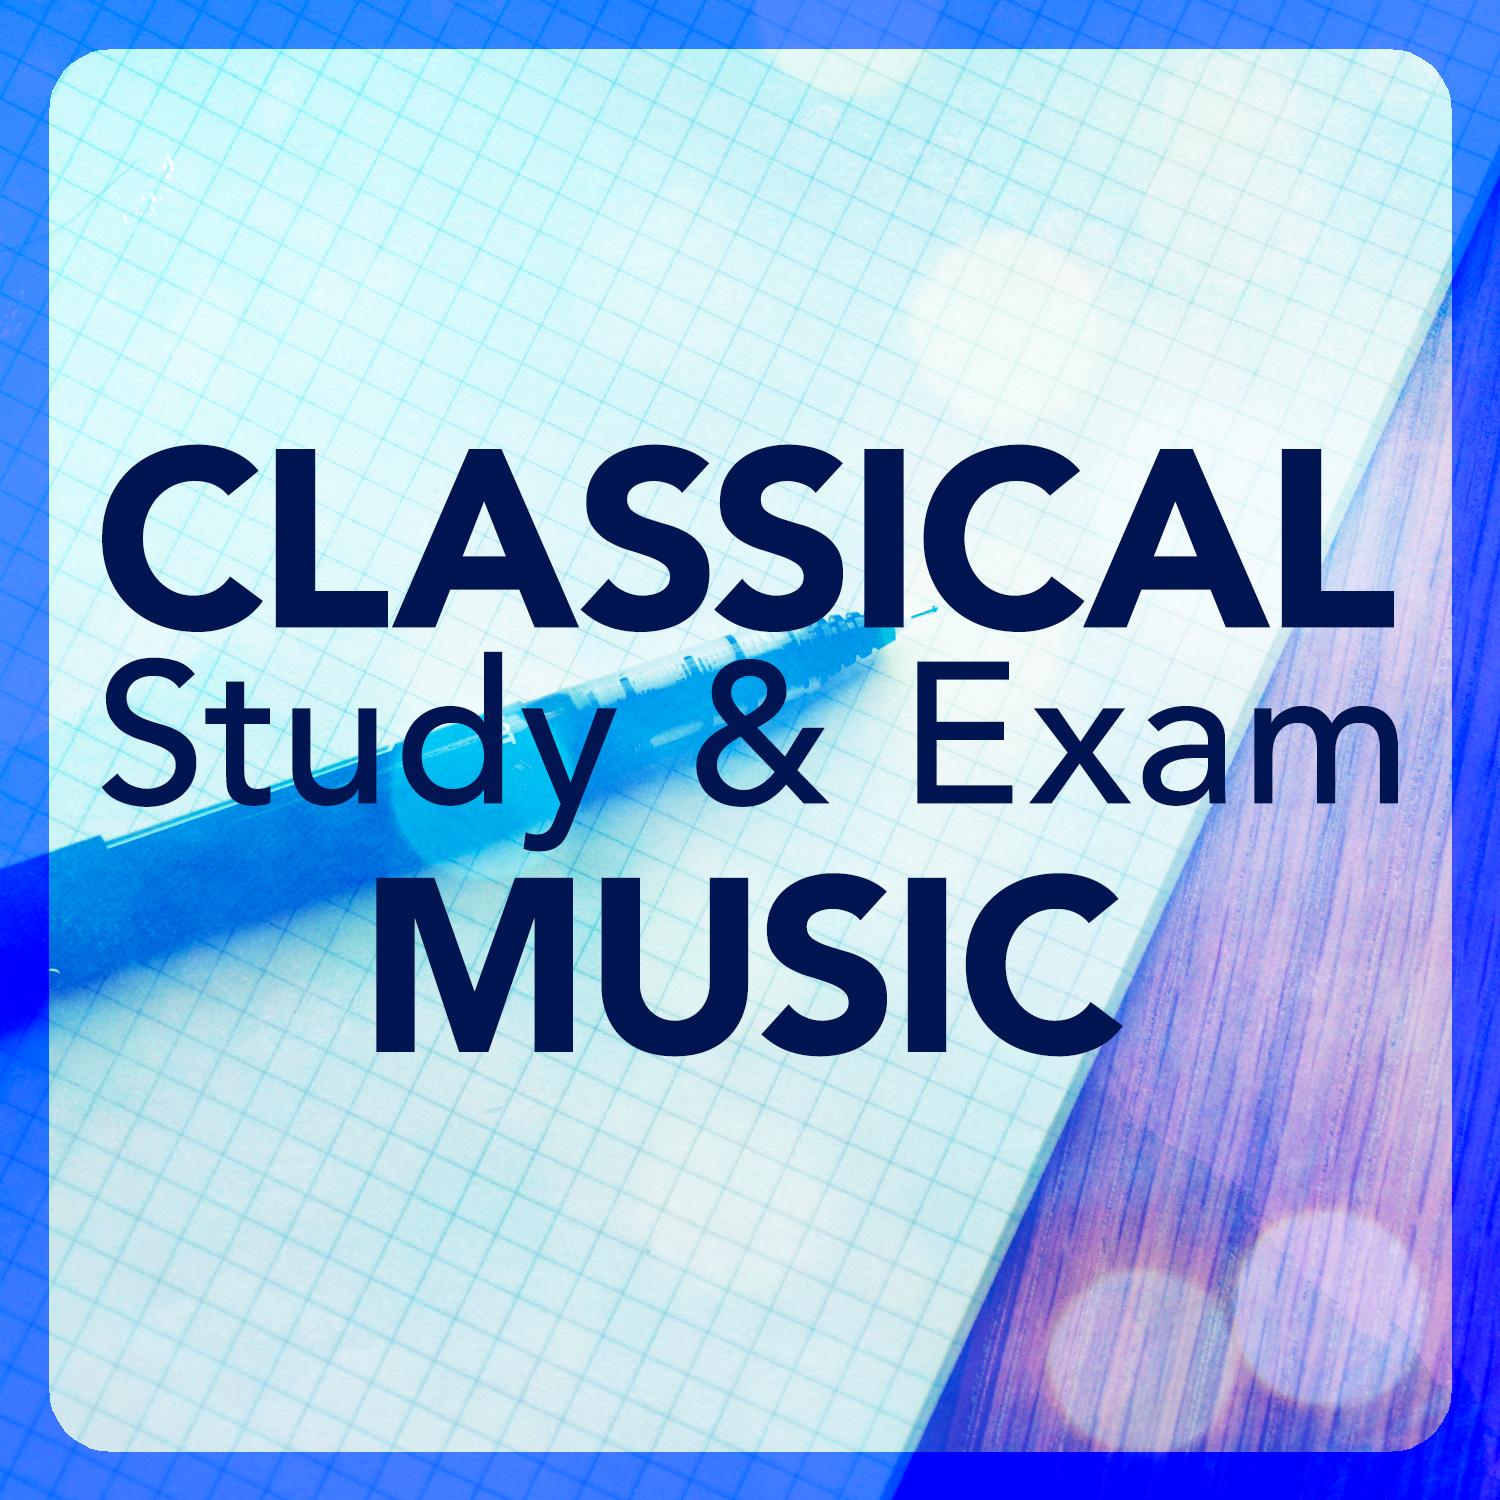 Classical Study & Exam Music